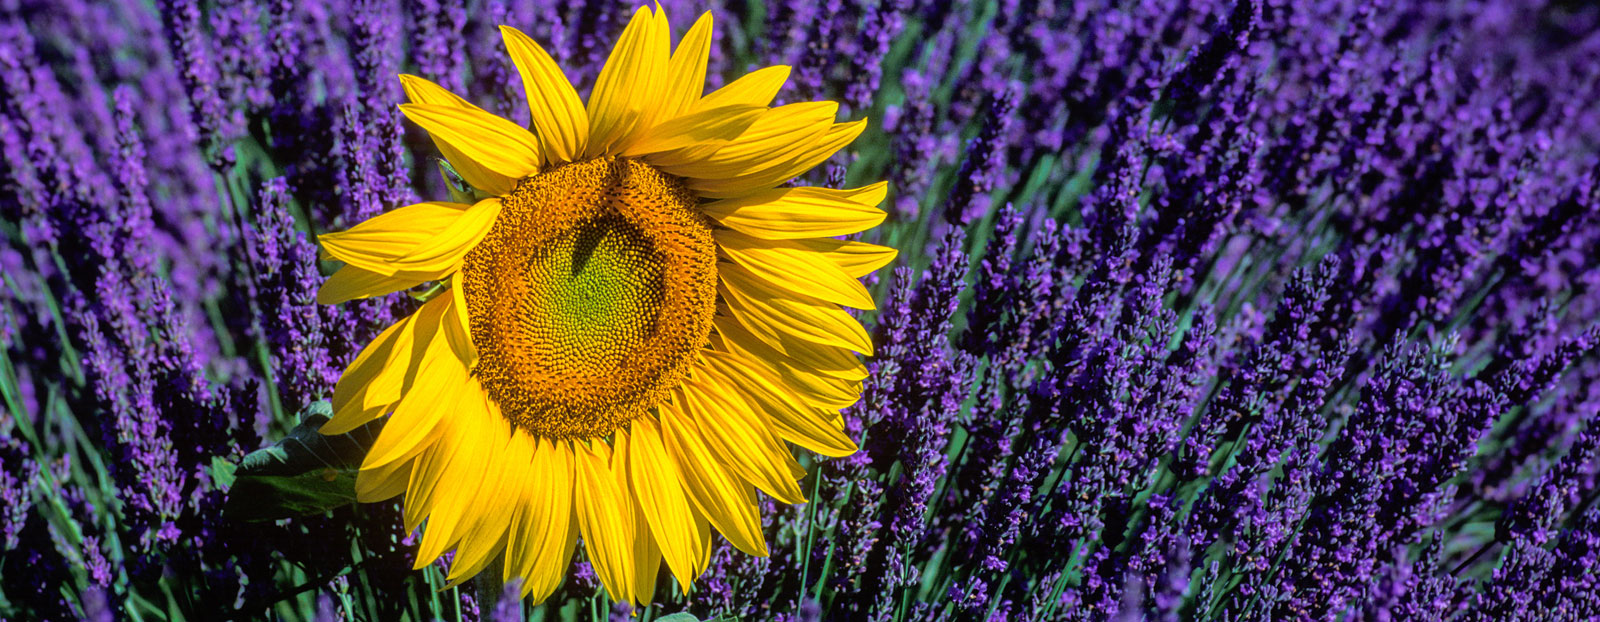 Sunflower in its natural habitat